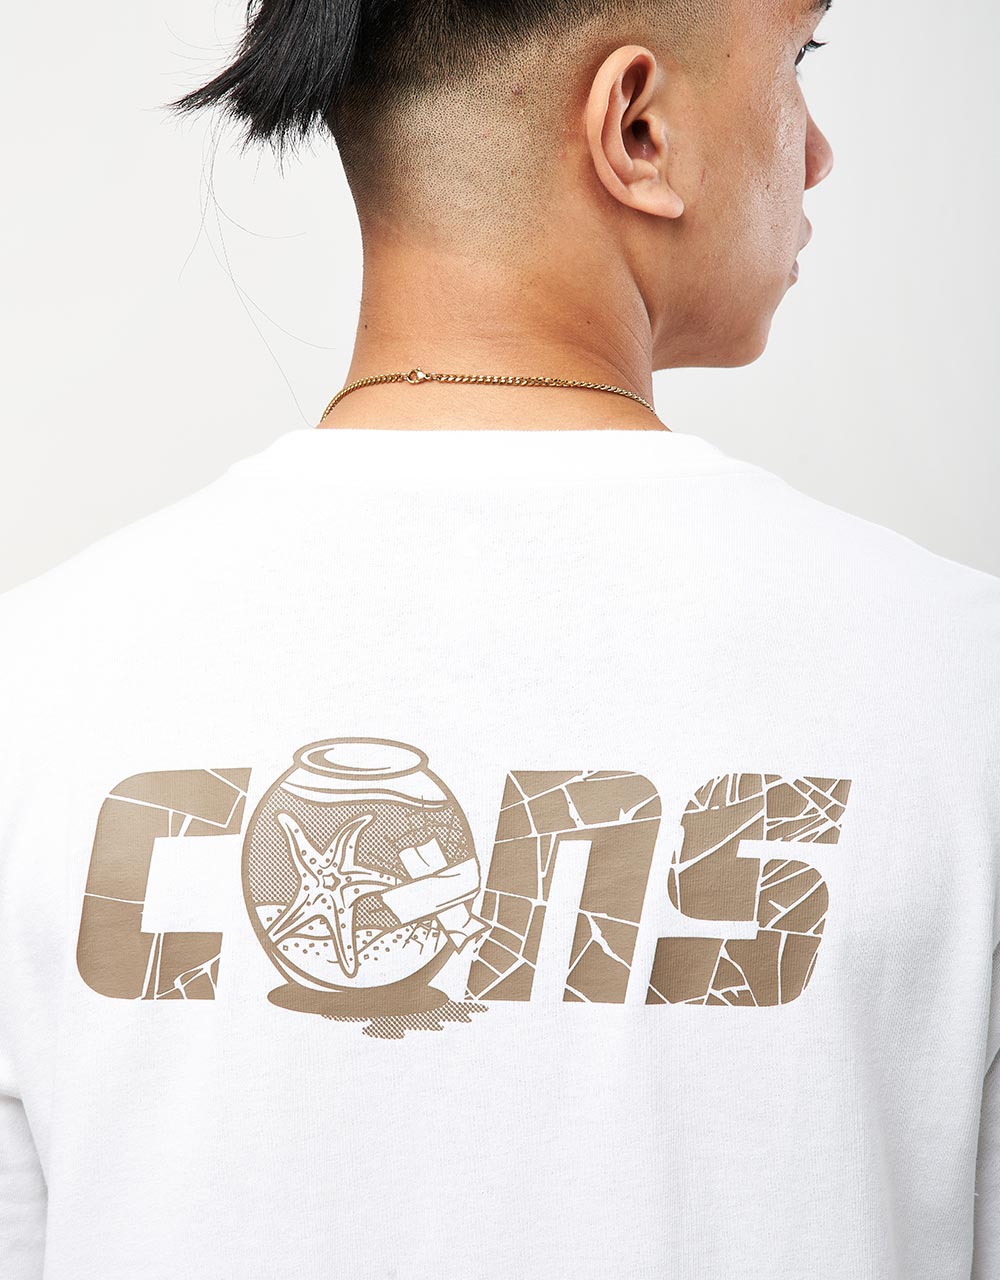 Converse Cons Fishbowl T-Shirt - White